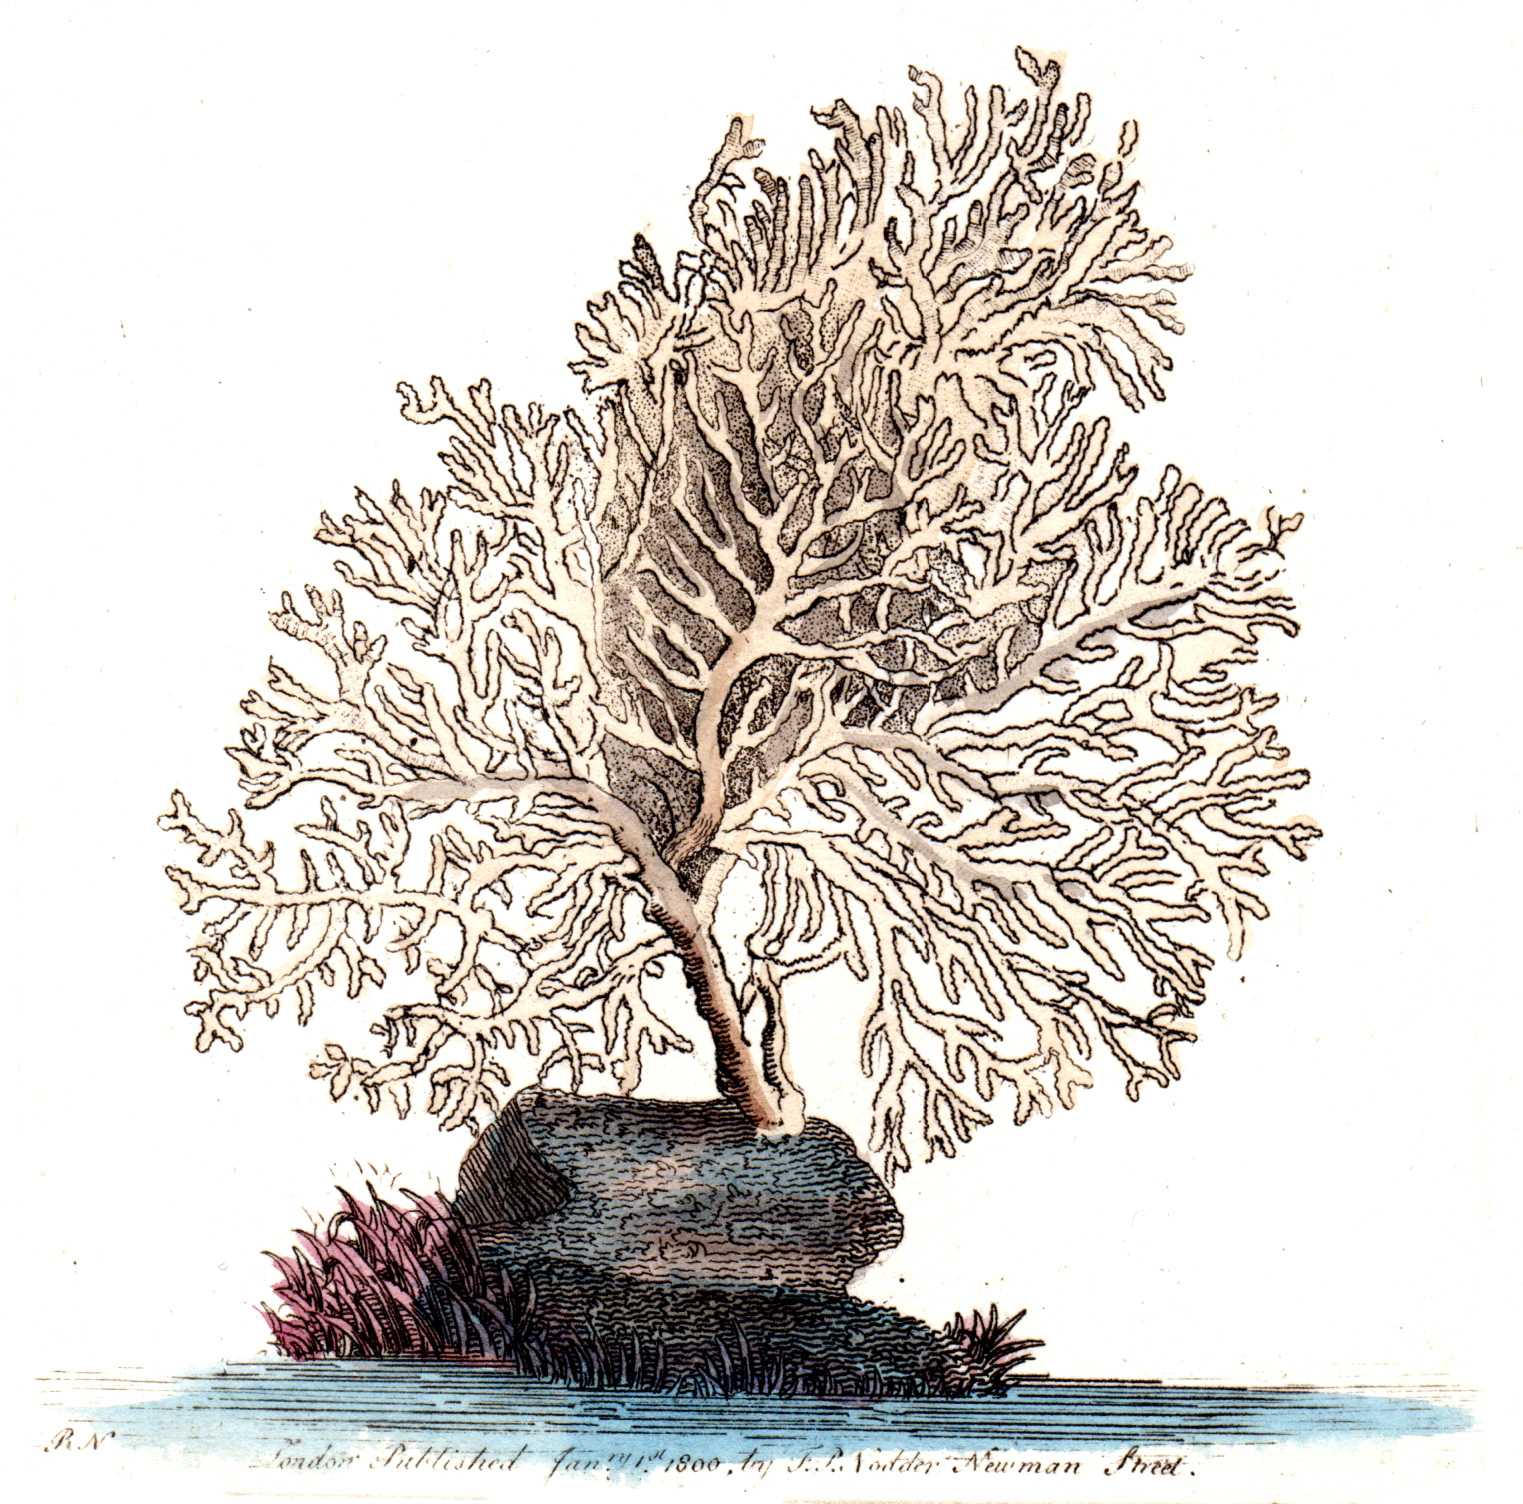 Shaw, George / Nodder, Frederick & Robert P. – Corals, Sponges, Anemones, etc.